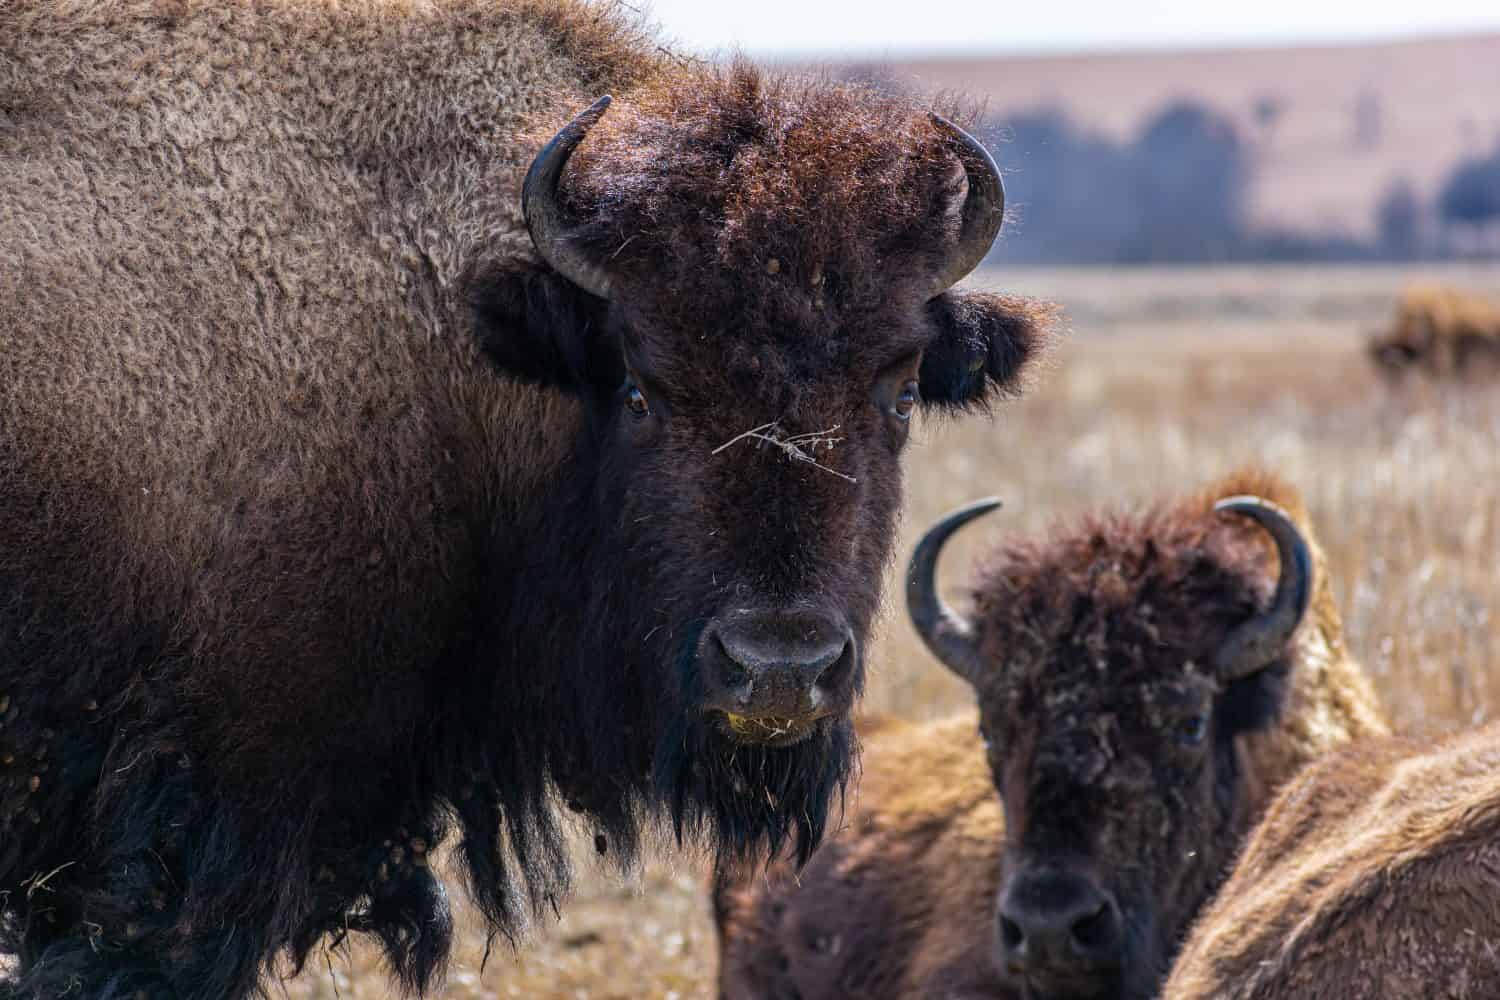 Bison at the tallgrass prairie preserve in Oklahoma